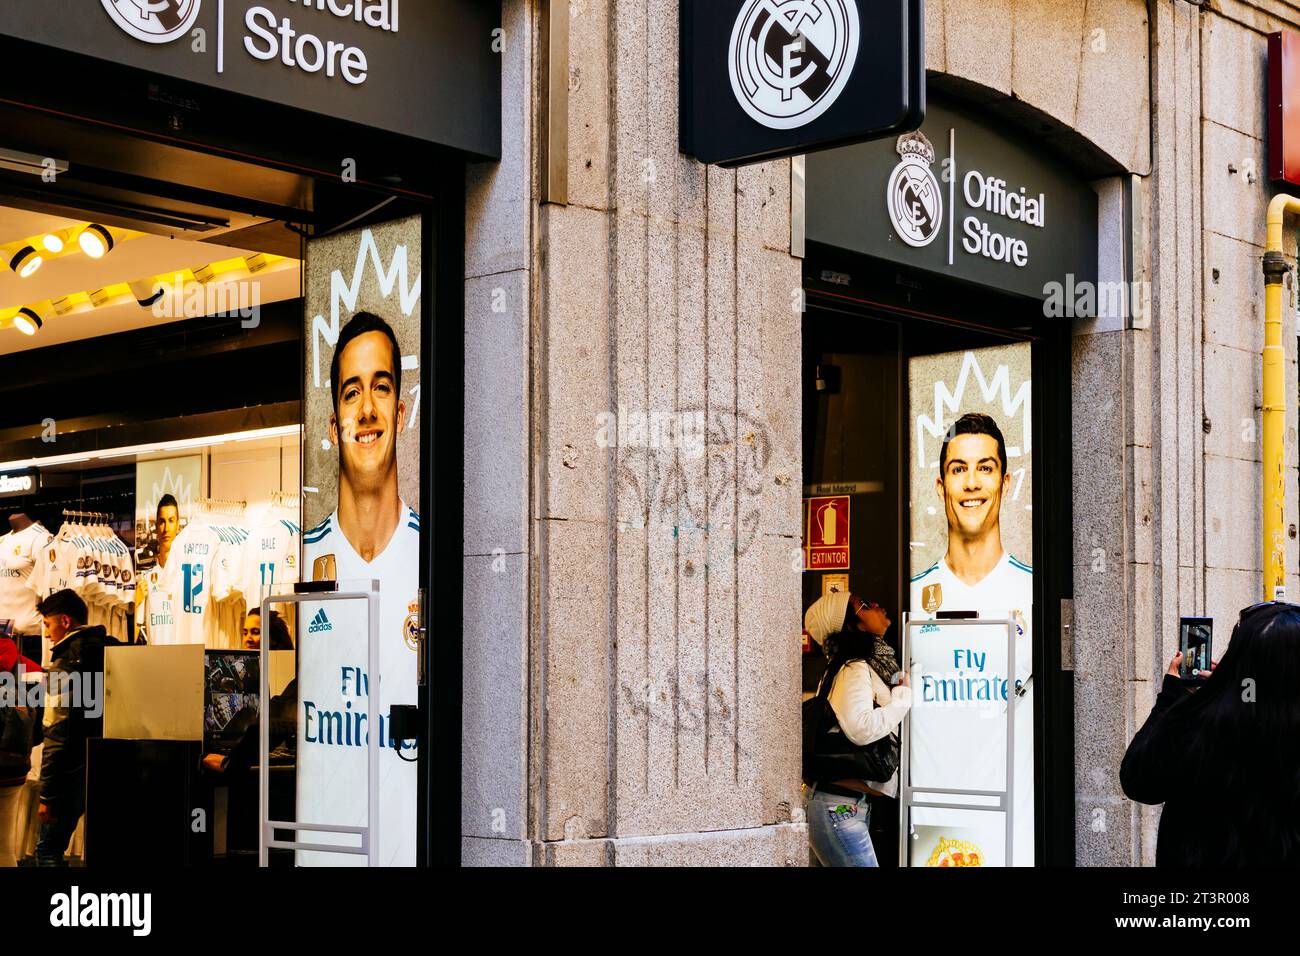 Official store of Real Madrid Club de Futbol. Madrid, Comunidad de madrid, Spain, Europe Stock Photo